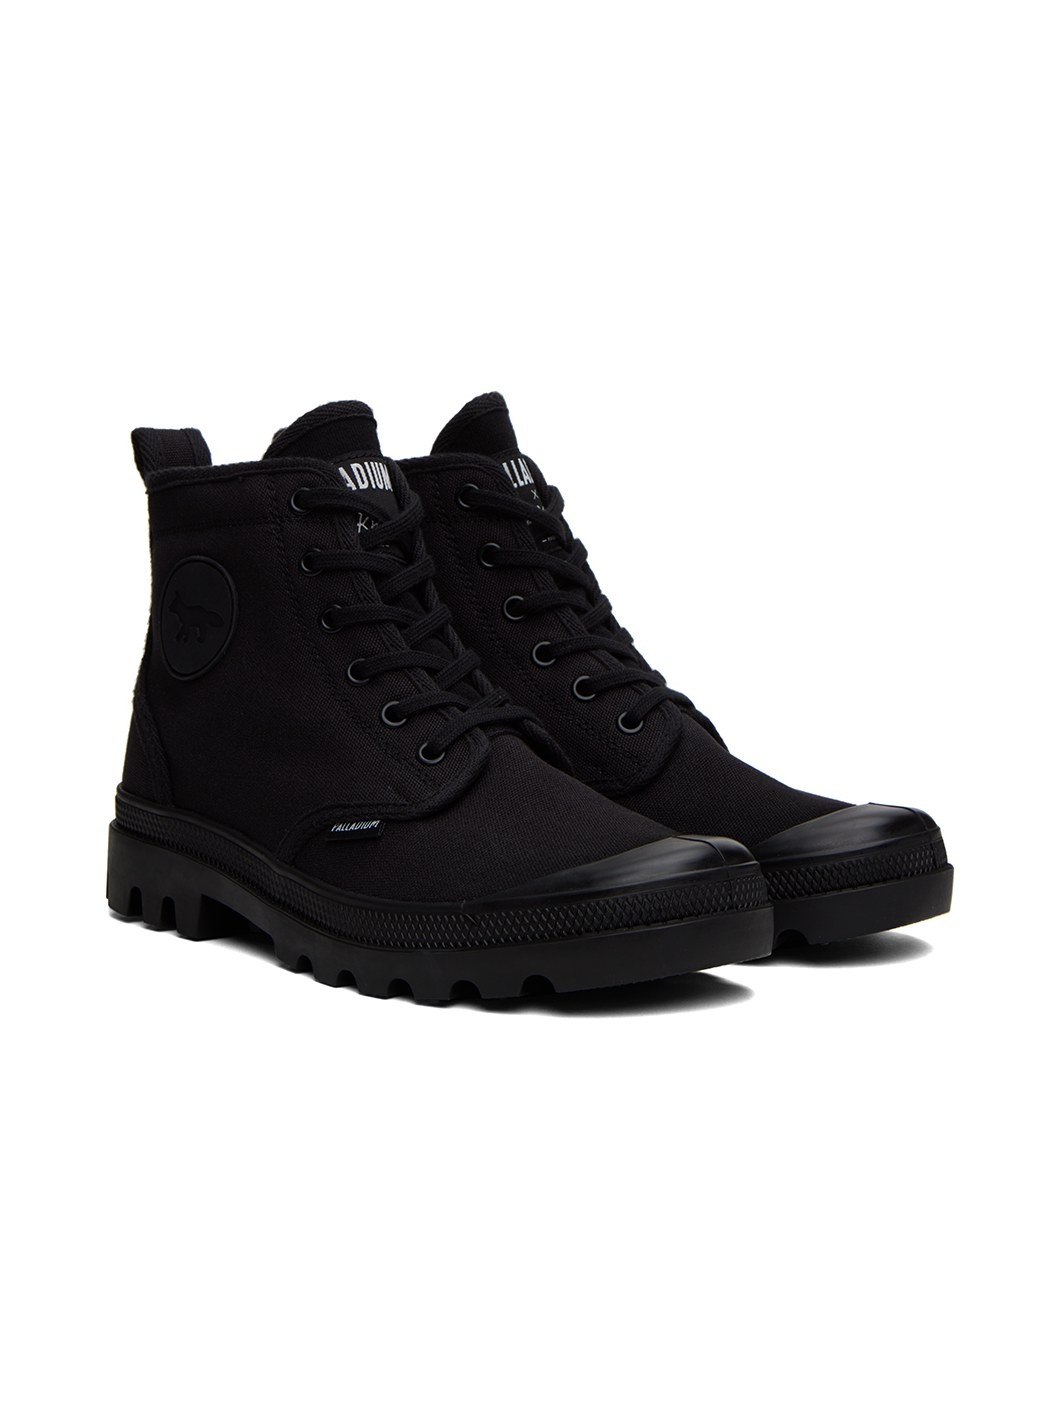 Black Palladium Edition Boots - 4